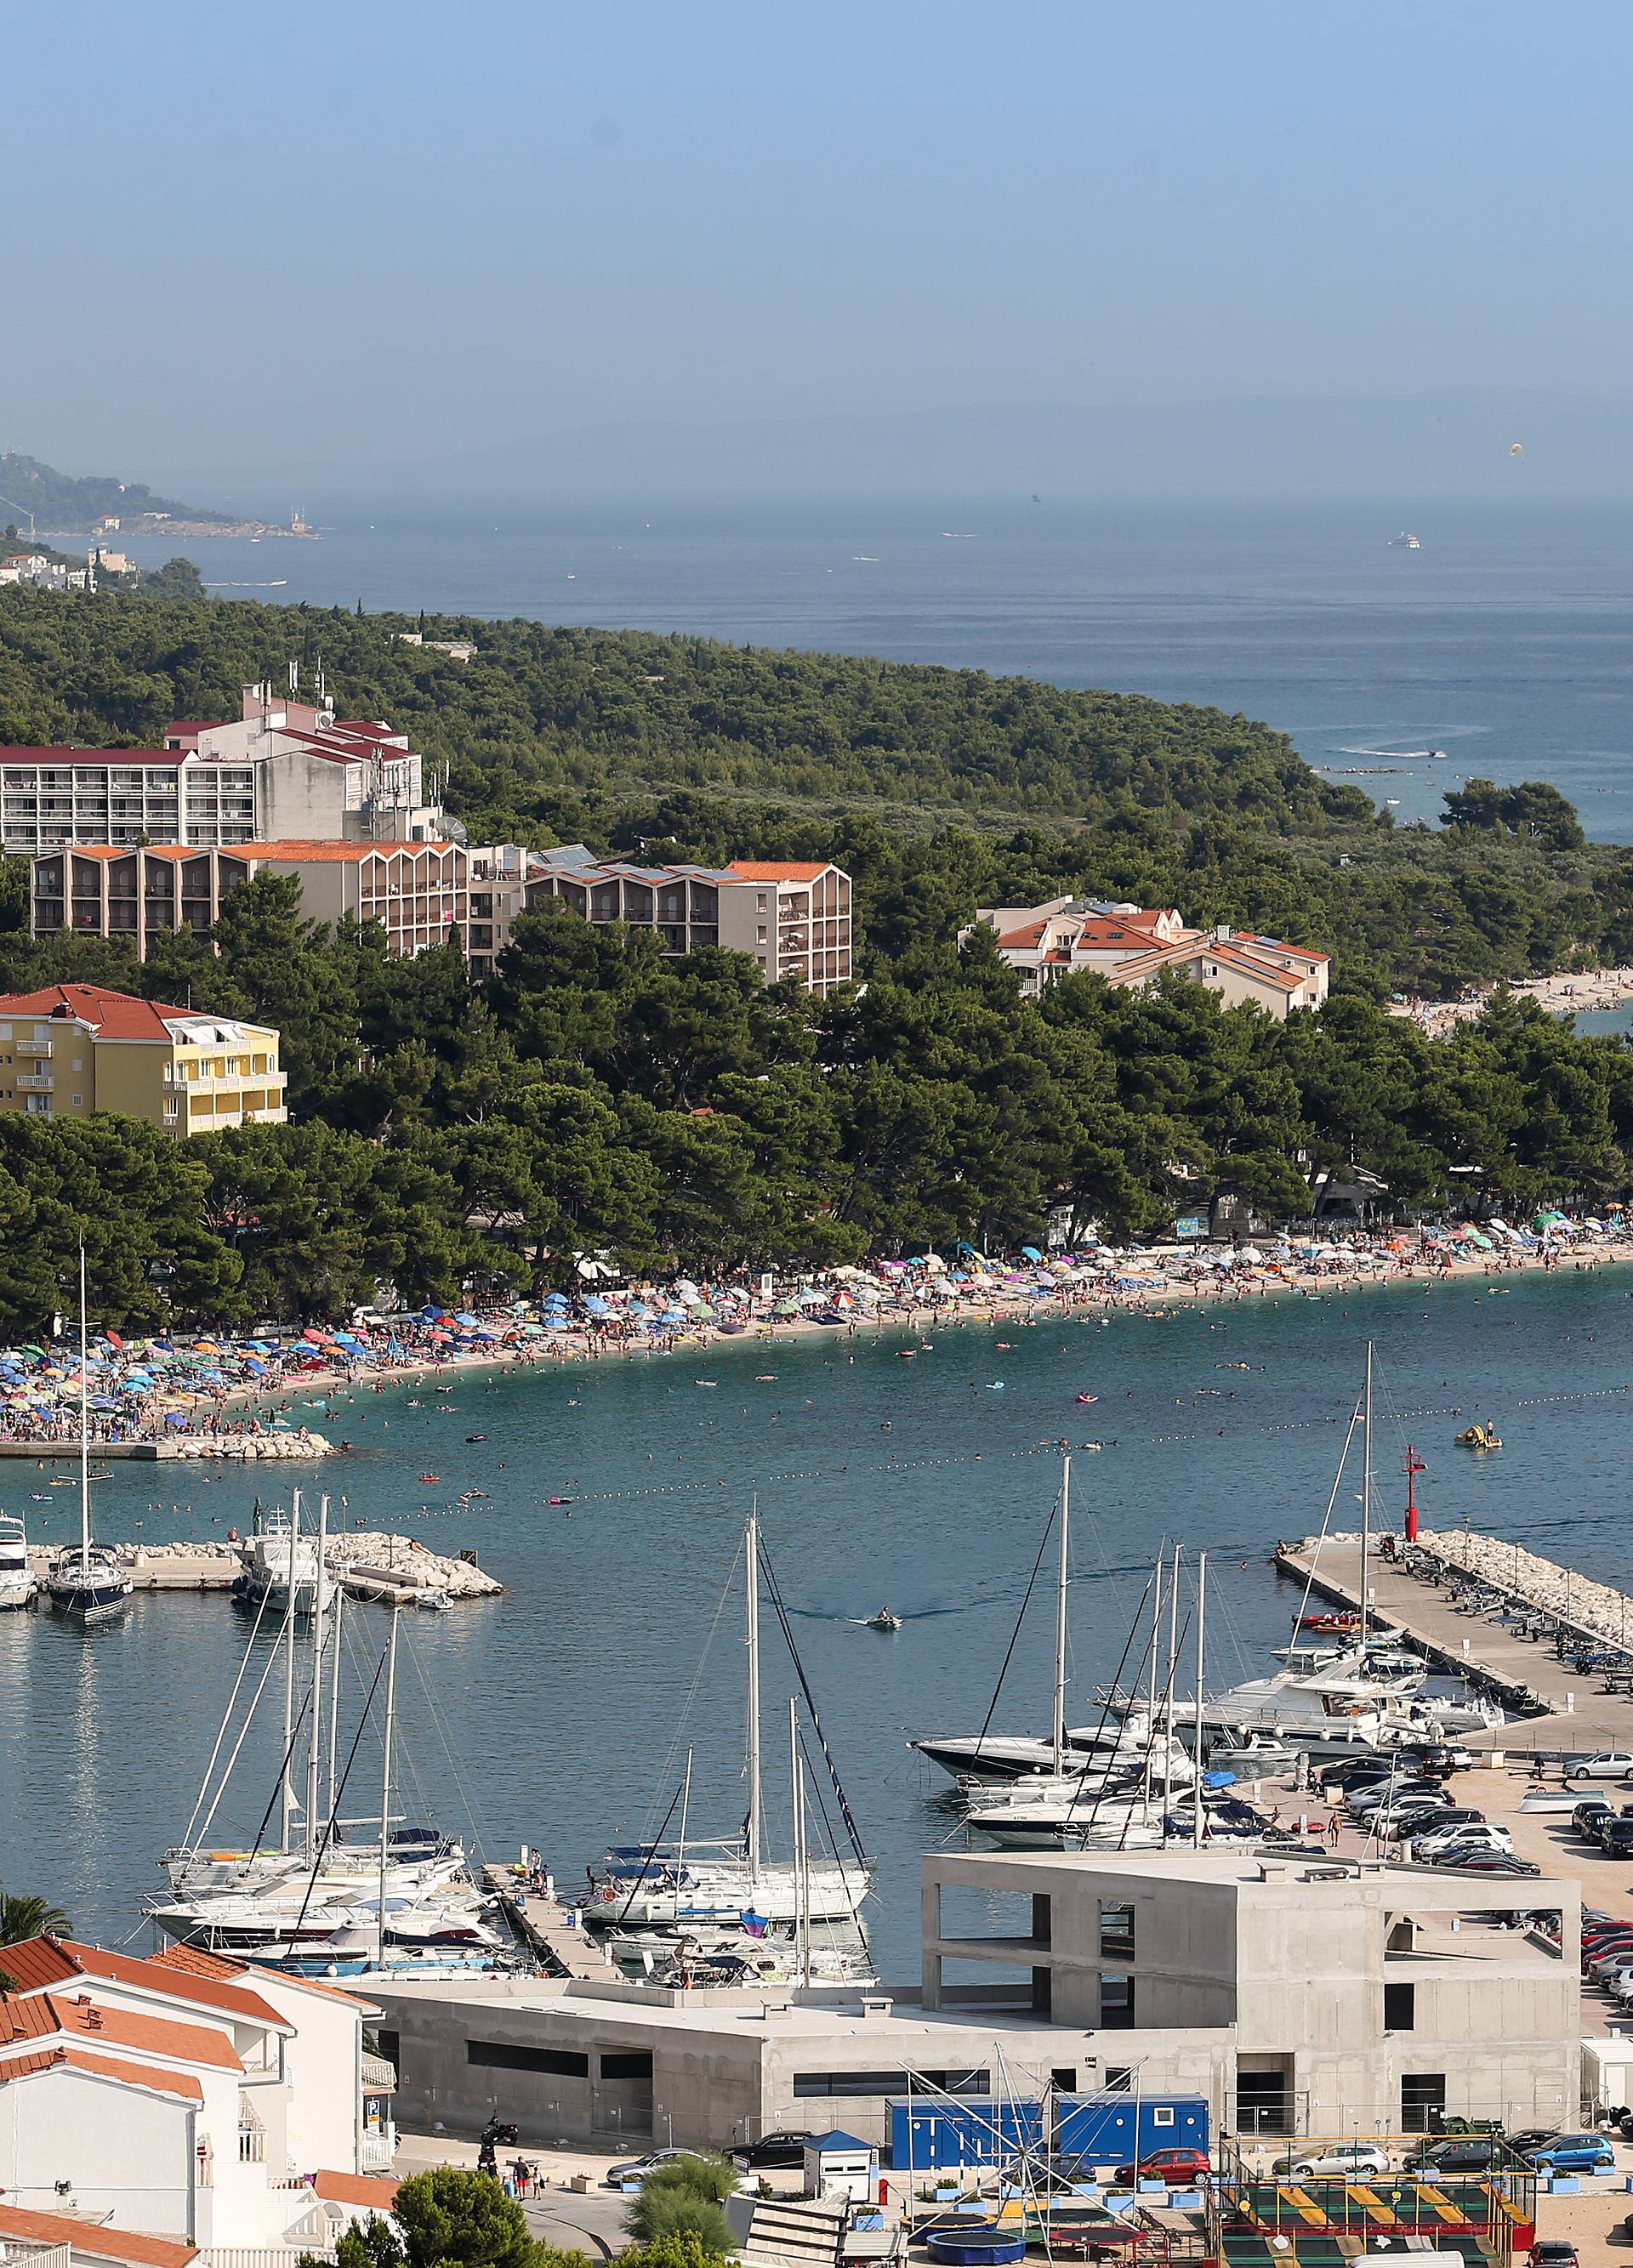 Prodaja dalmatinskog hotela je razljutila Srbe: 'To je naše'